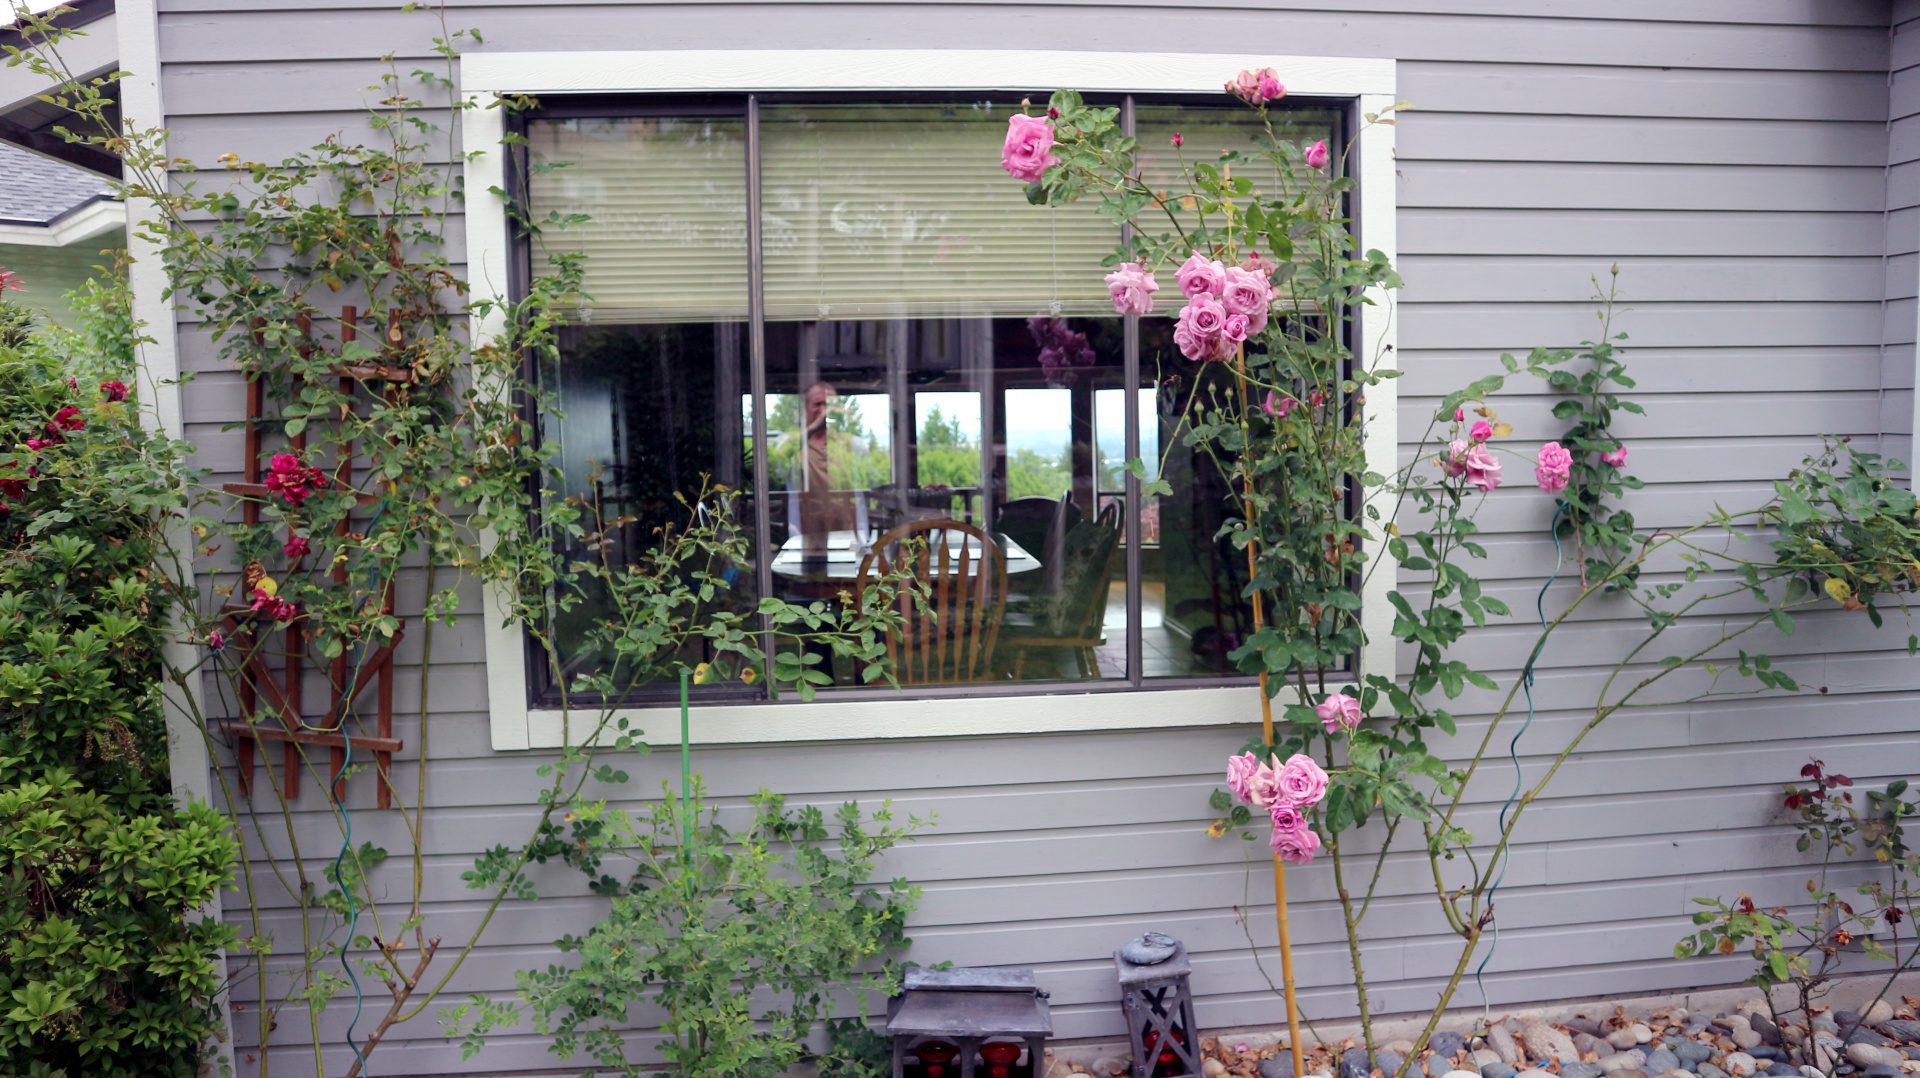 Backyard Window Flowers Roses Plants Free Image From Needpix Com